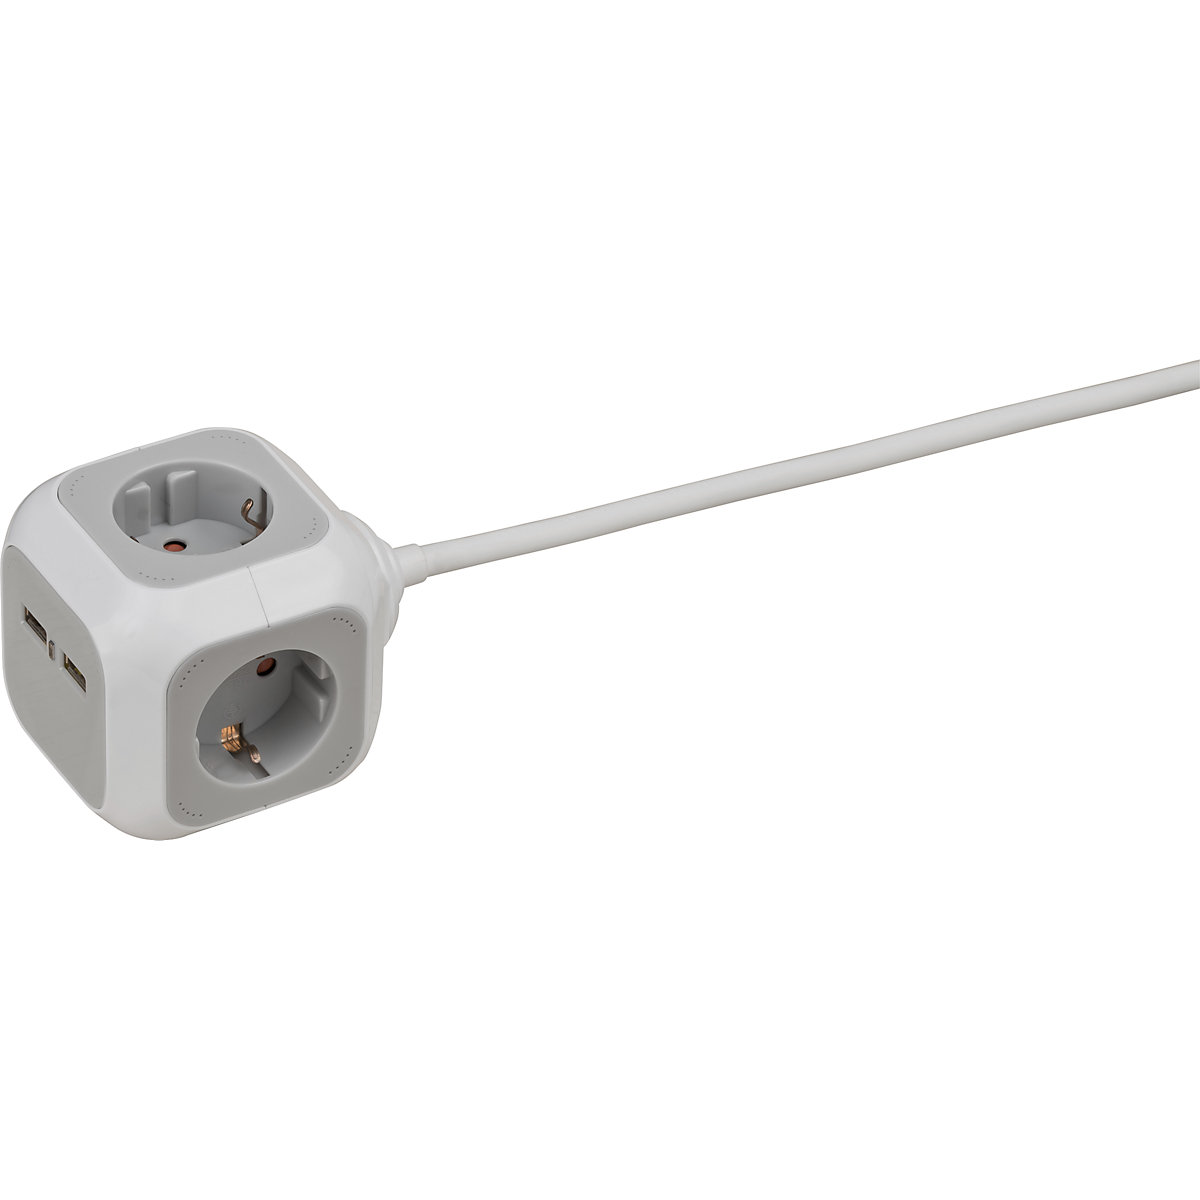 ALEA-Power socket strip with USB charger – Brennenstuhl (Product illustration 3)-2